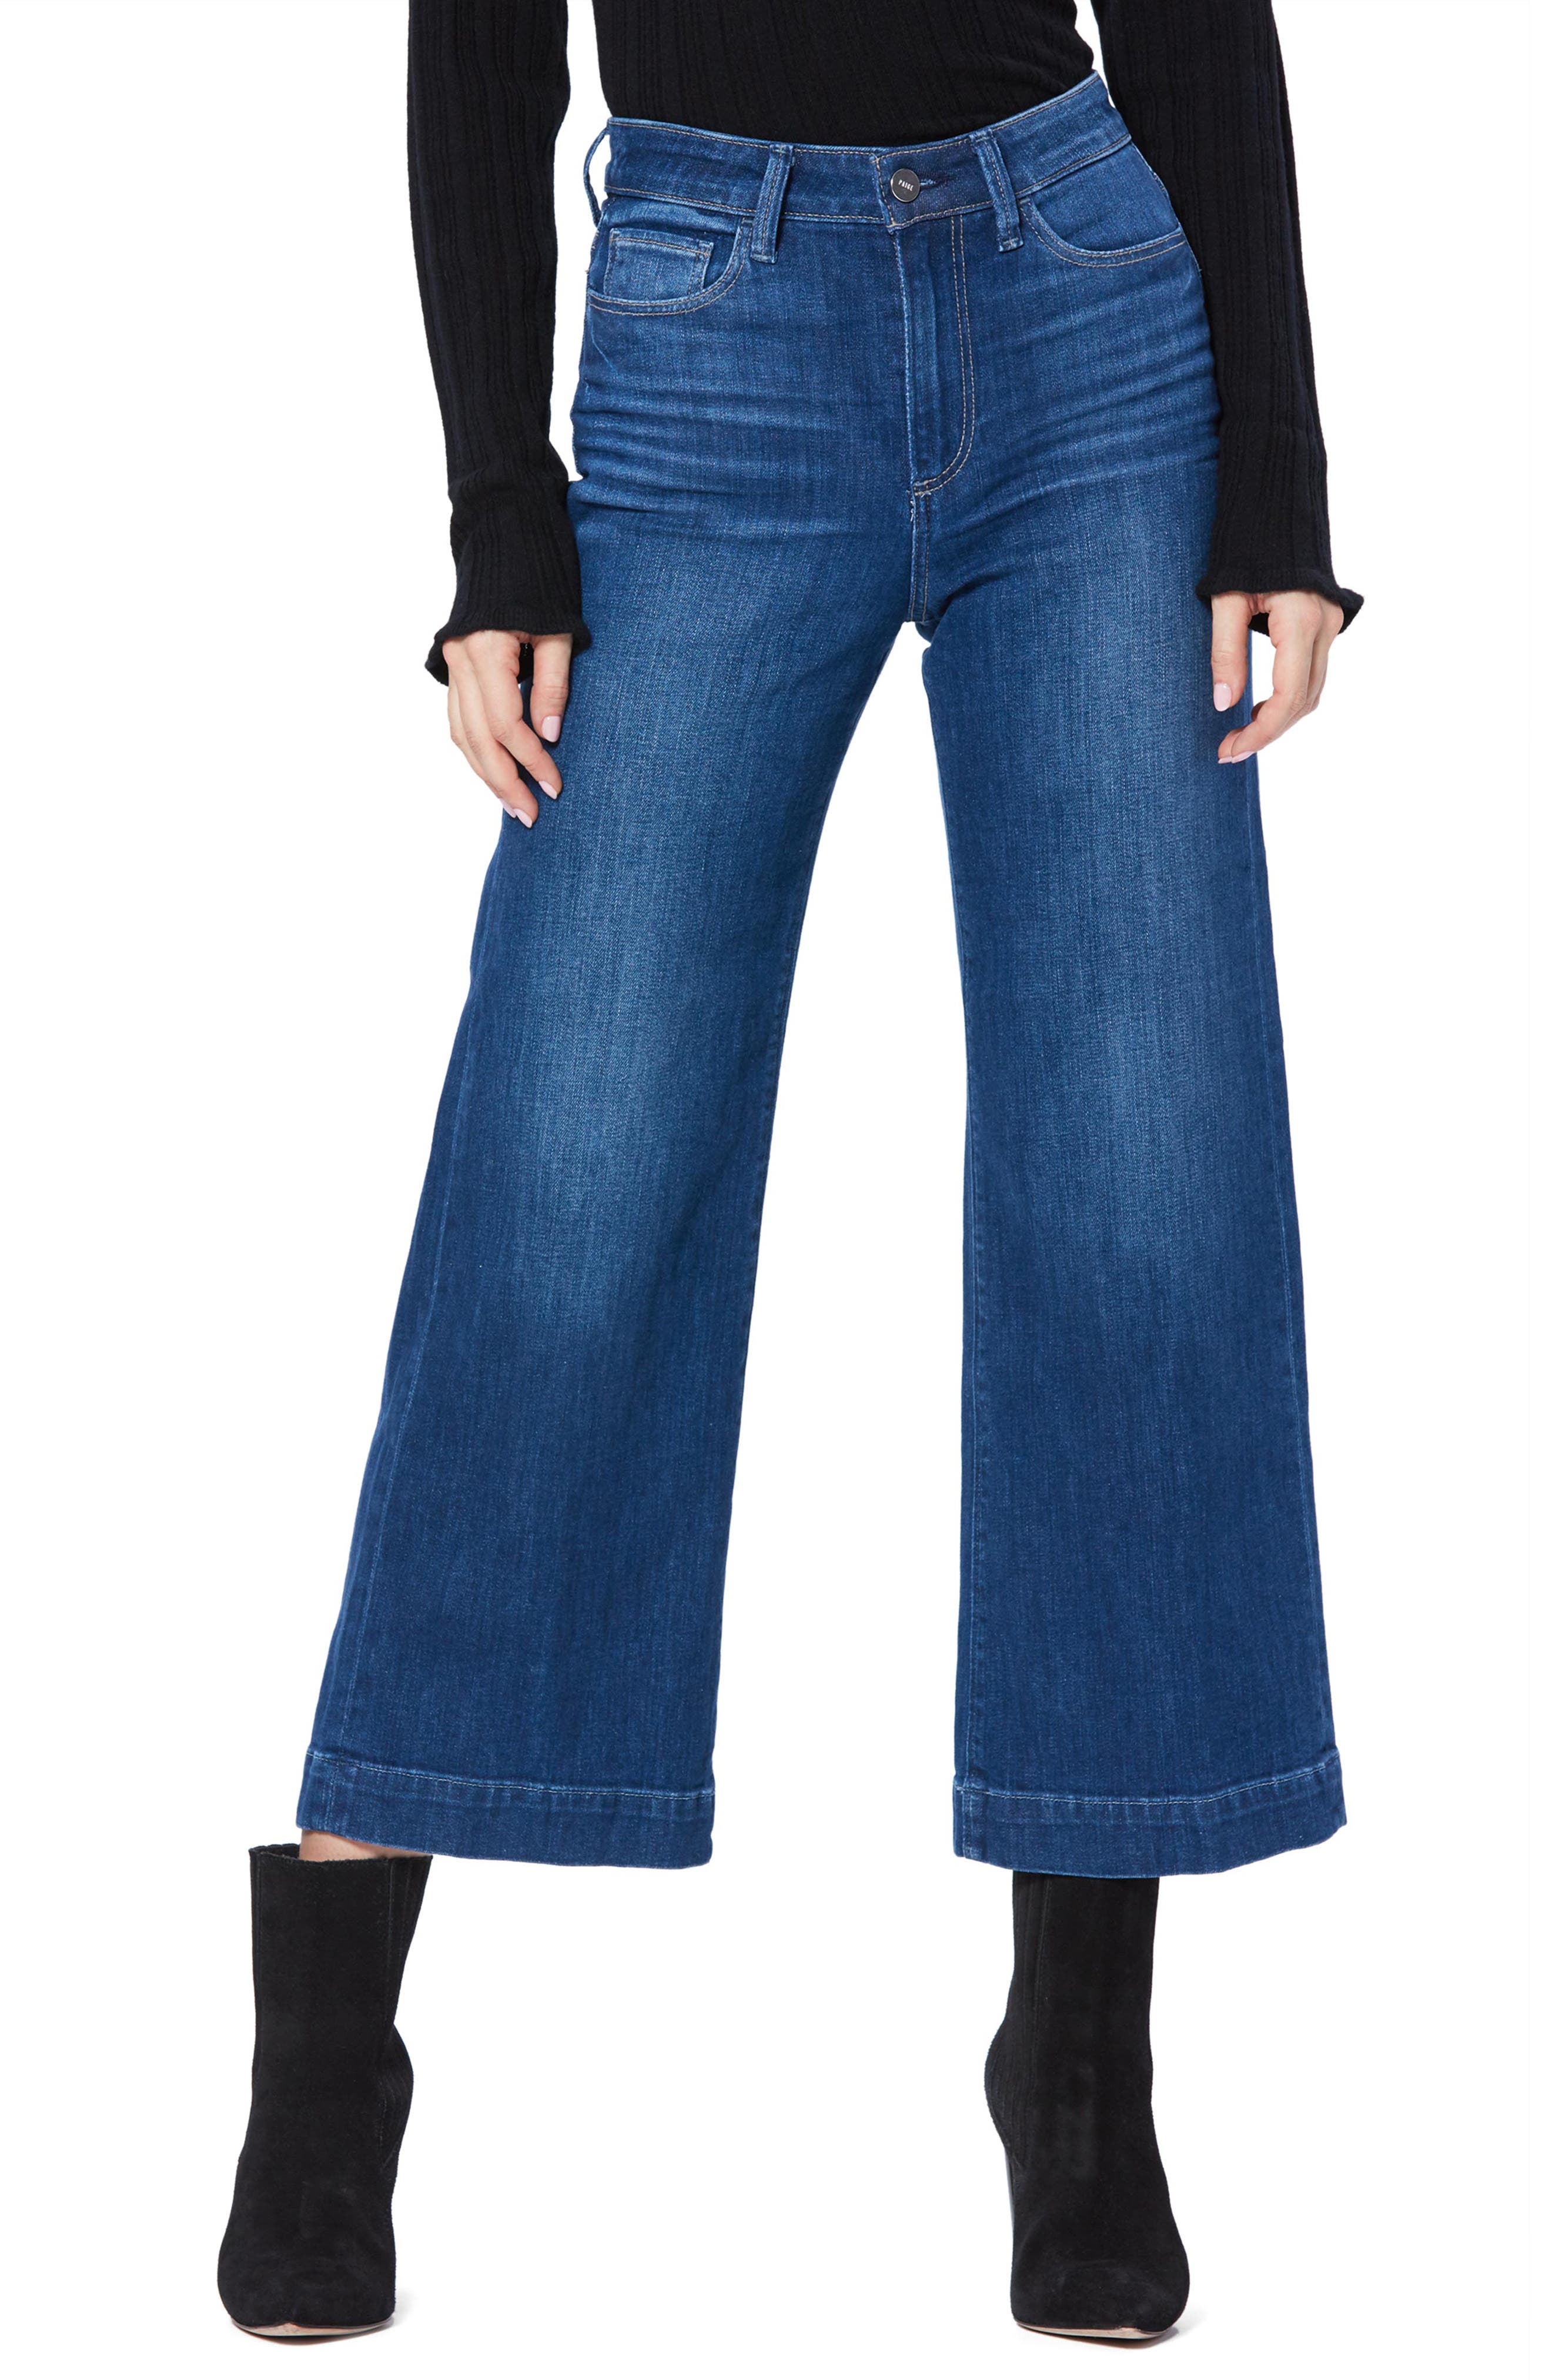 paige wide leg cropped jeans